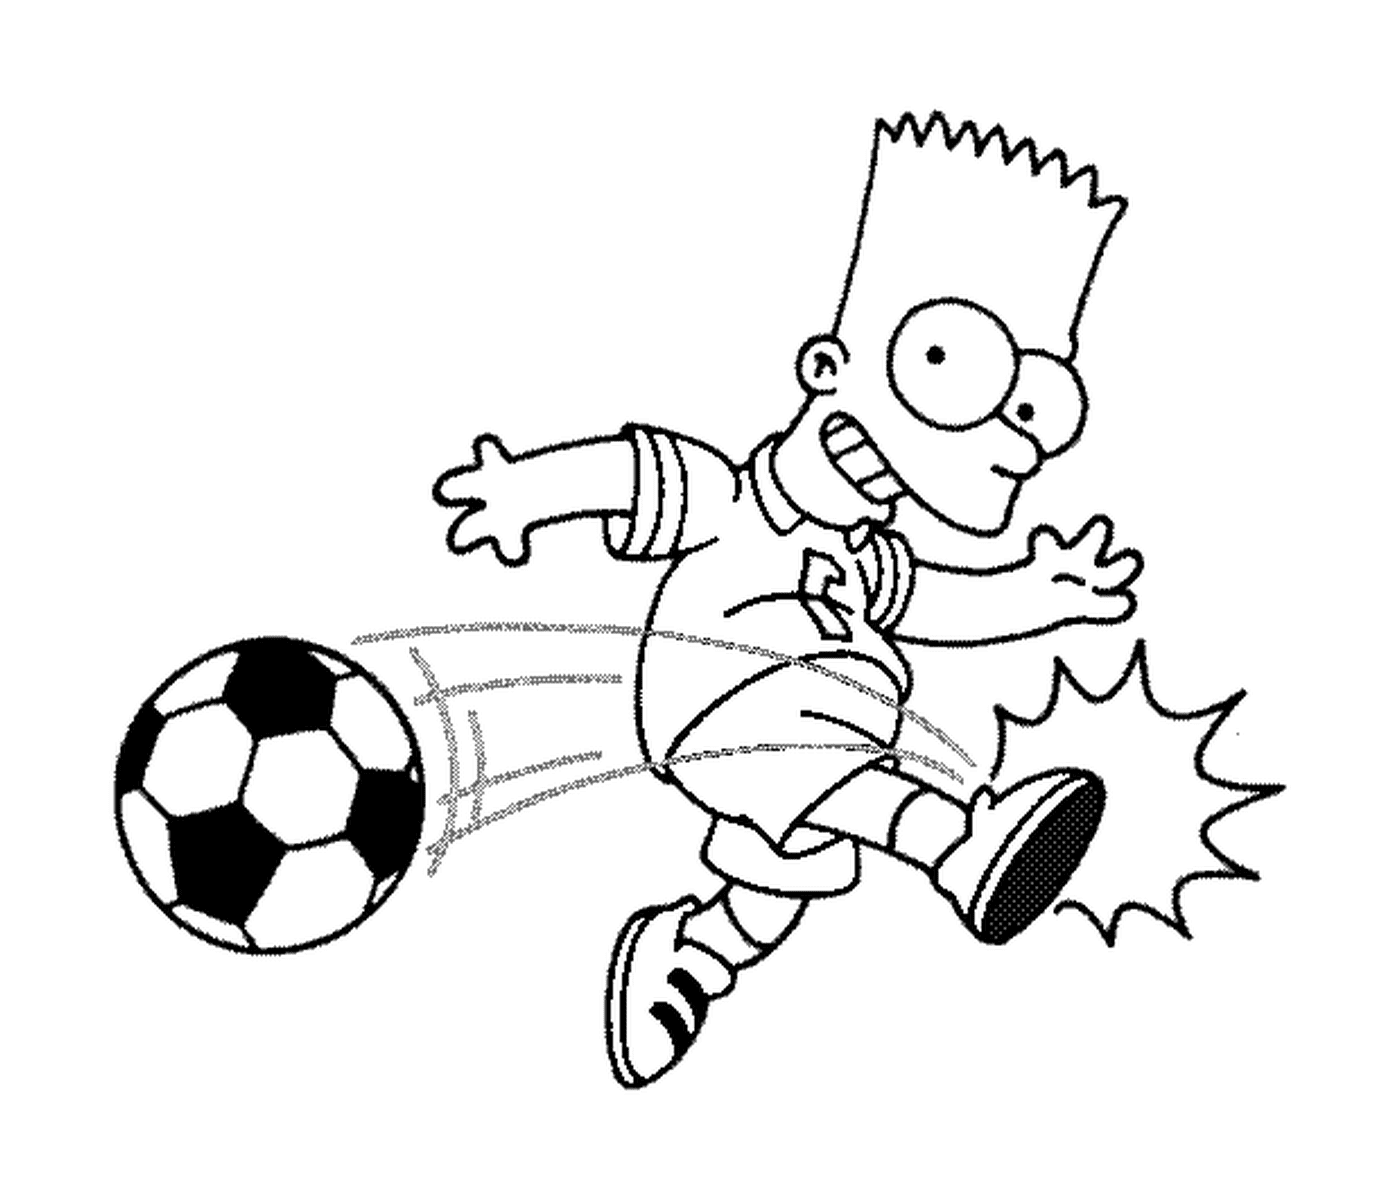  Bart bate uma bola 